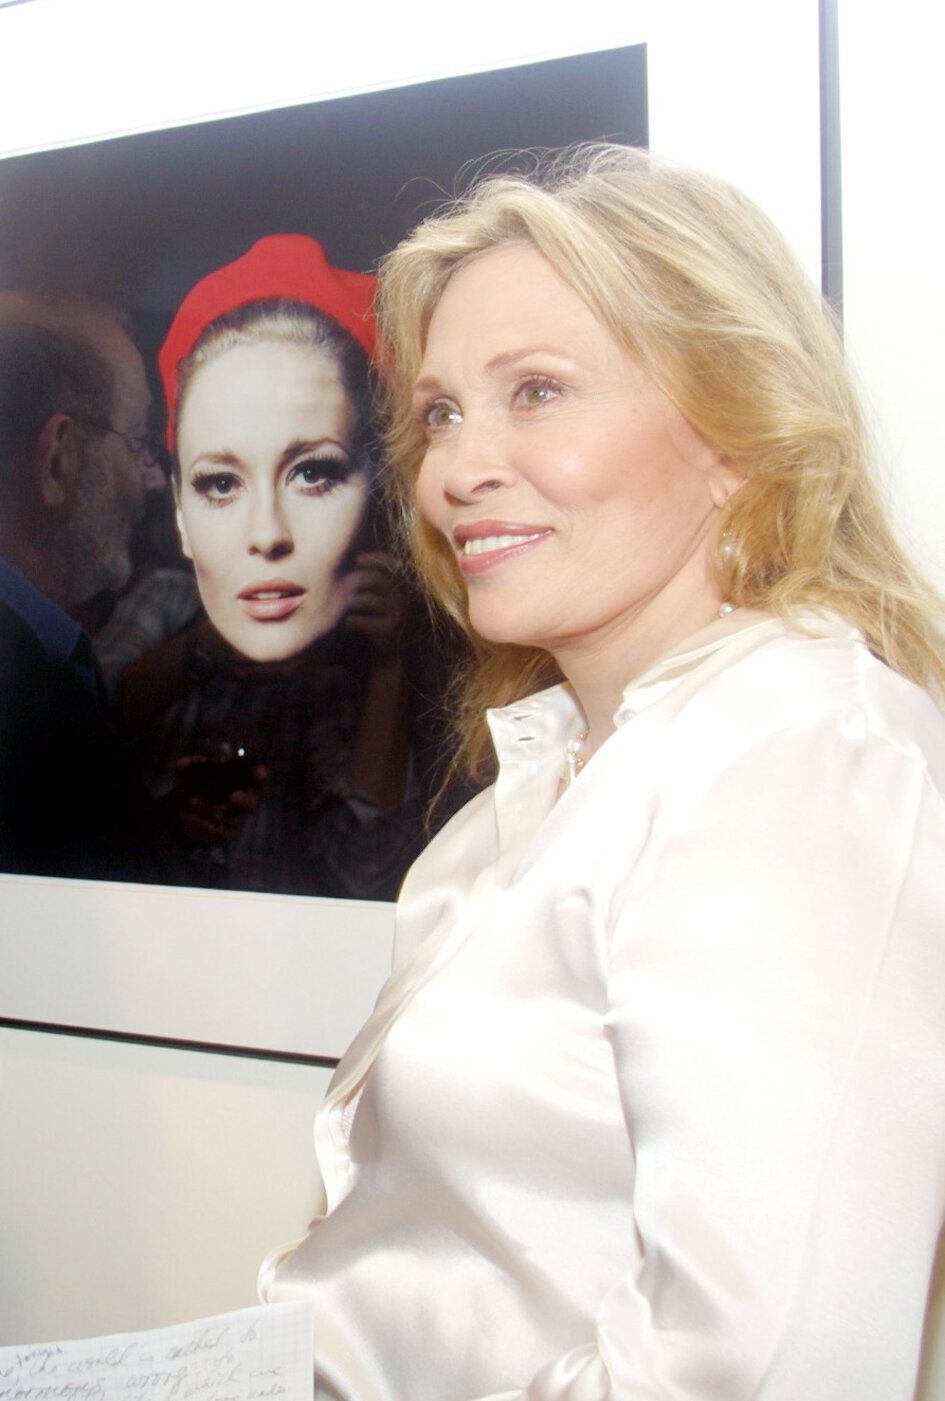 2001 - H Φέι Ντάναγουεϊ φωτογραφίζεται δίπλα στο πορτραίτο της